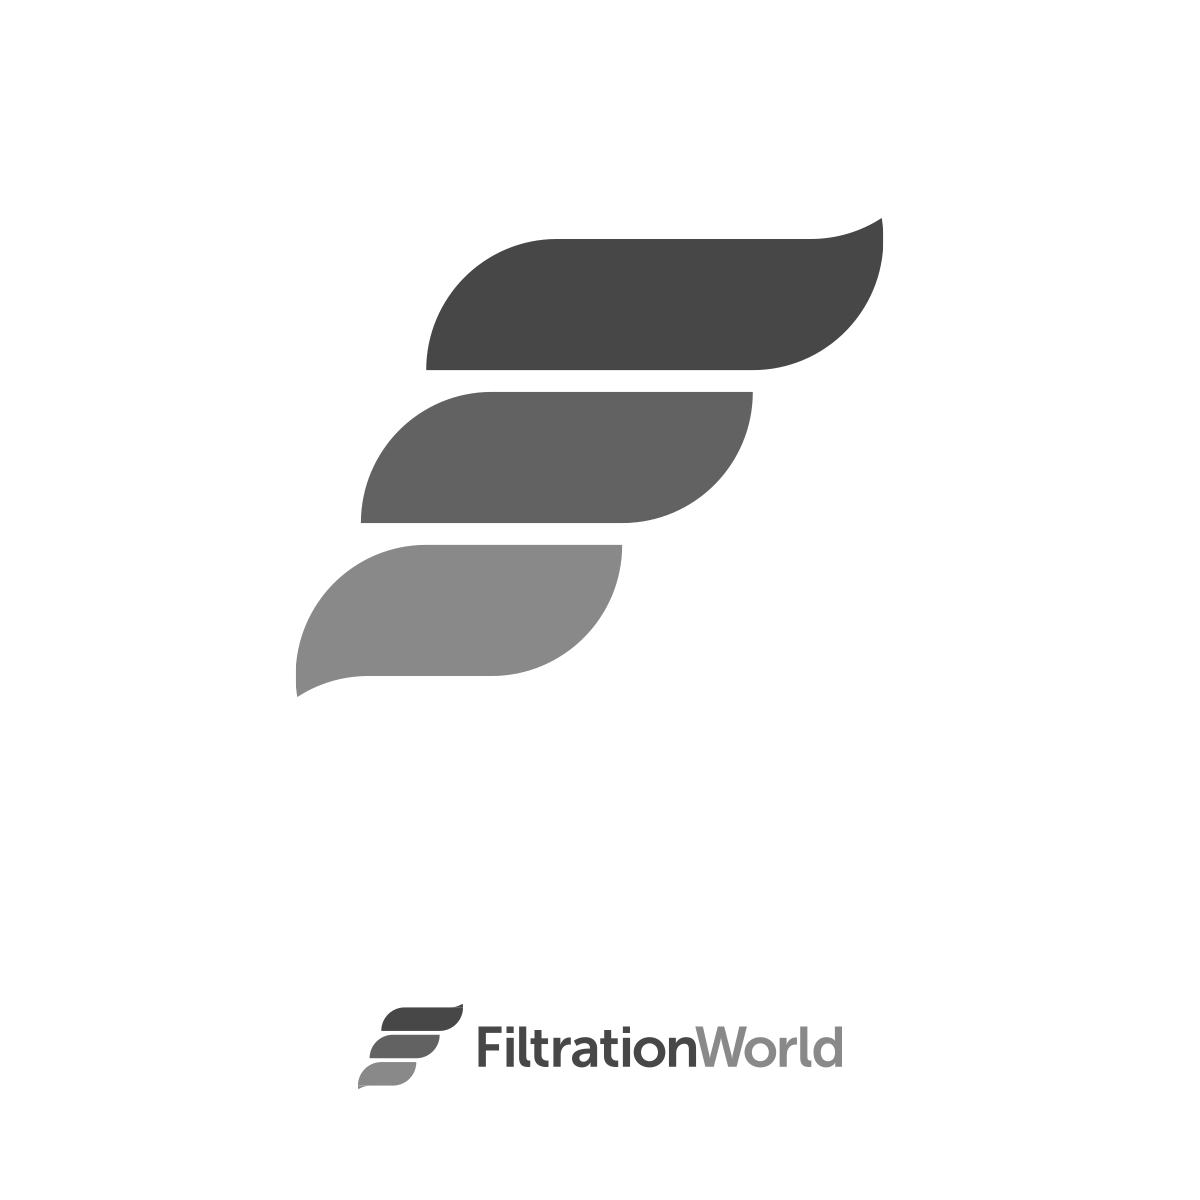 Filtration World logo v1